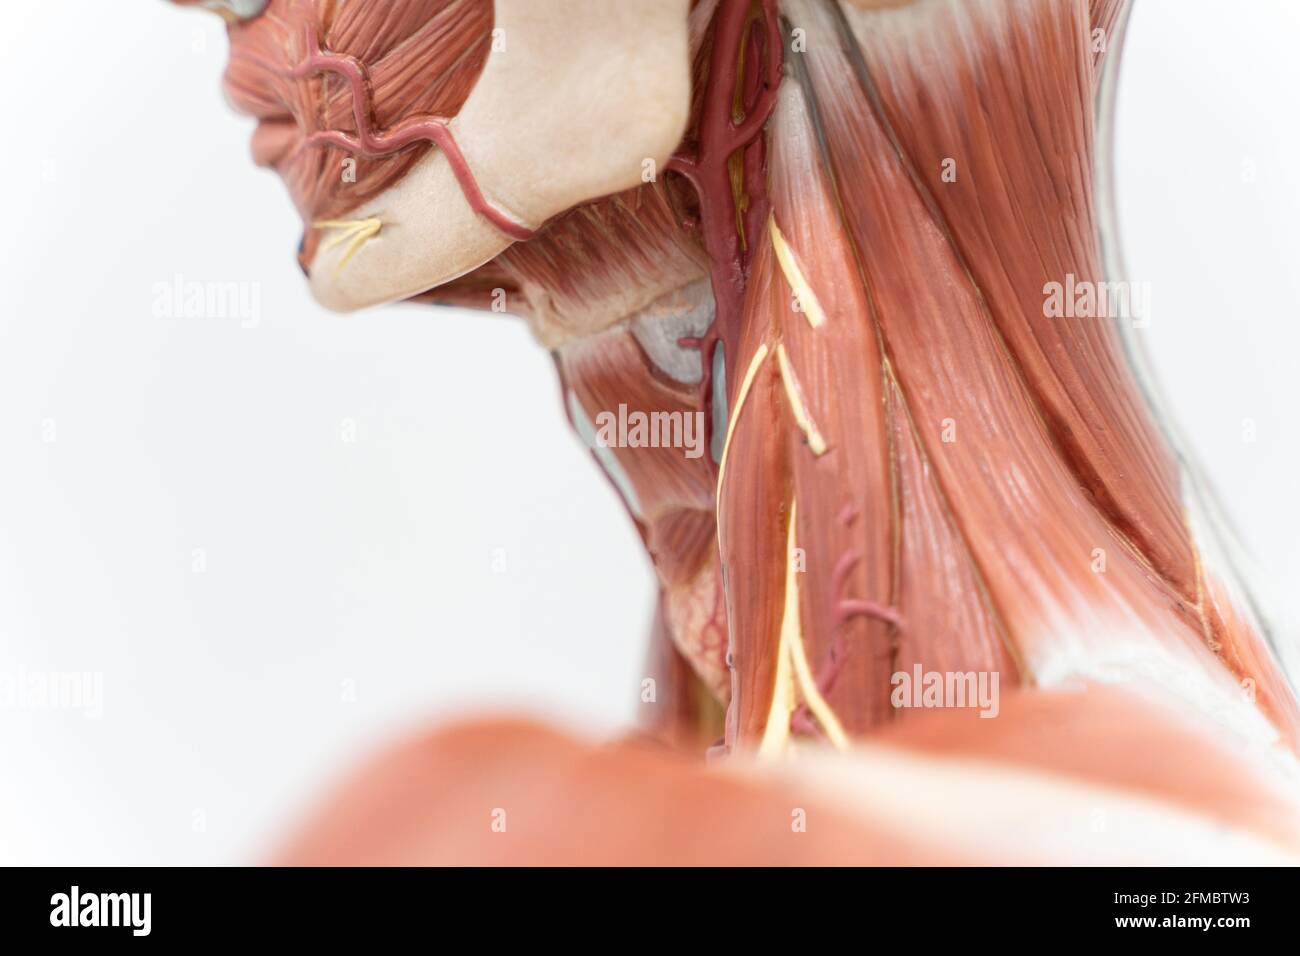 Human musculature anatomy model Stock Photo